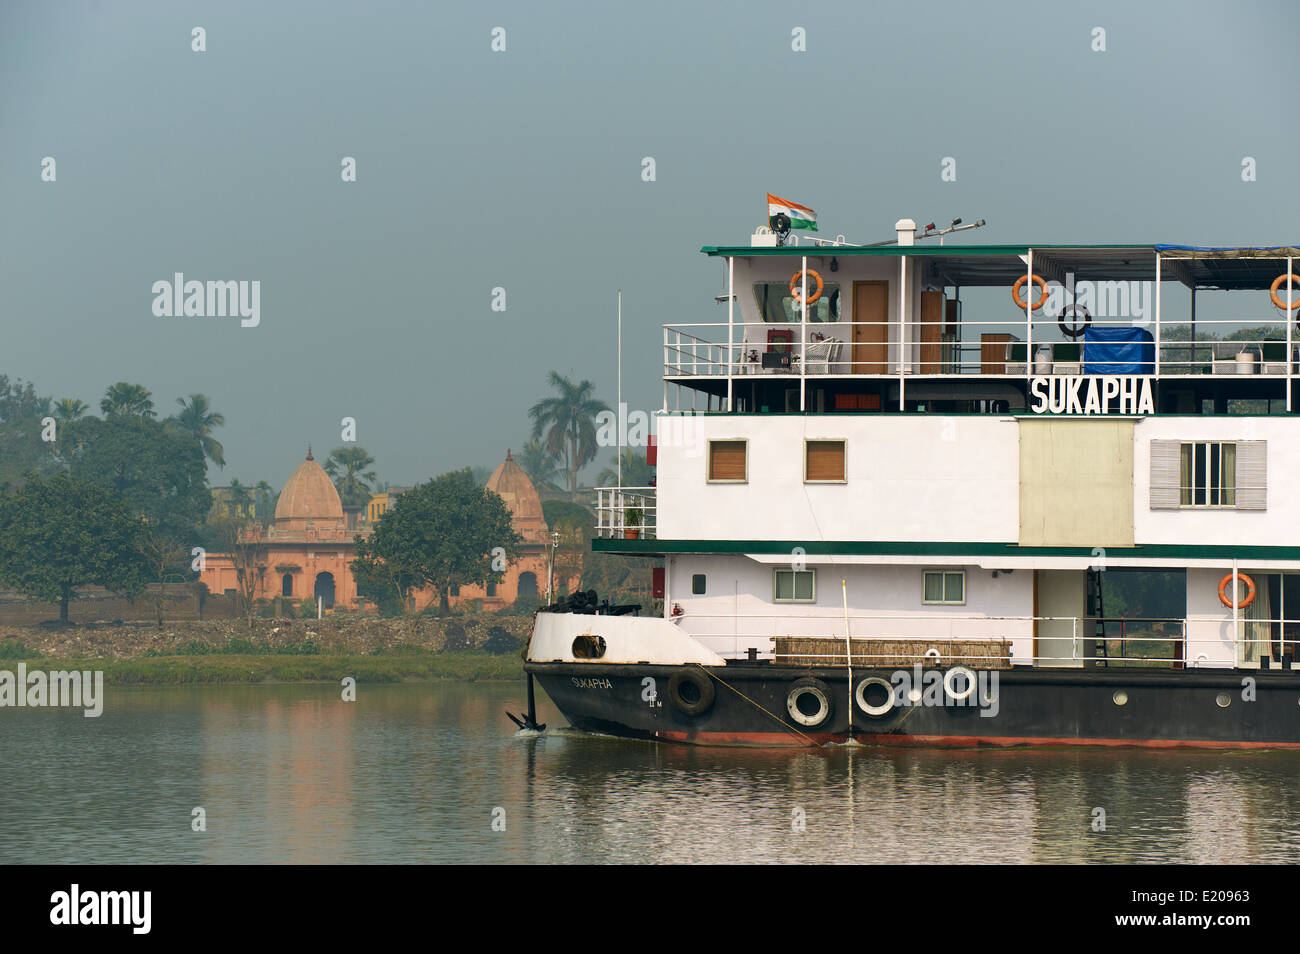 Indien, Westbengalen, Sukapha Boot am Fluss Hooghly, Teil des Ganges Fluß Stockfoto